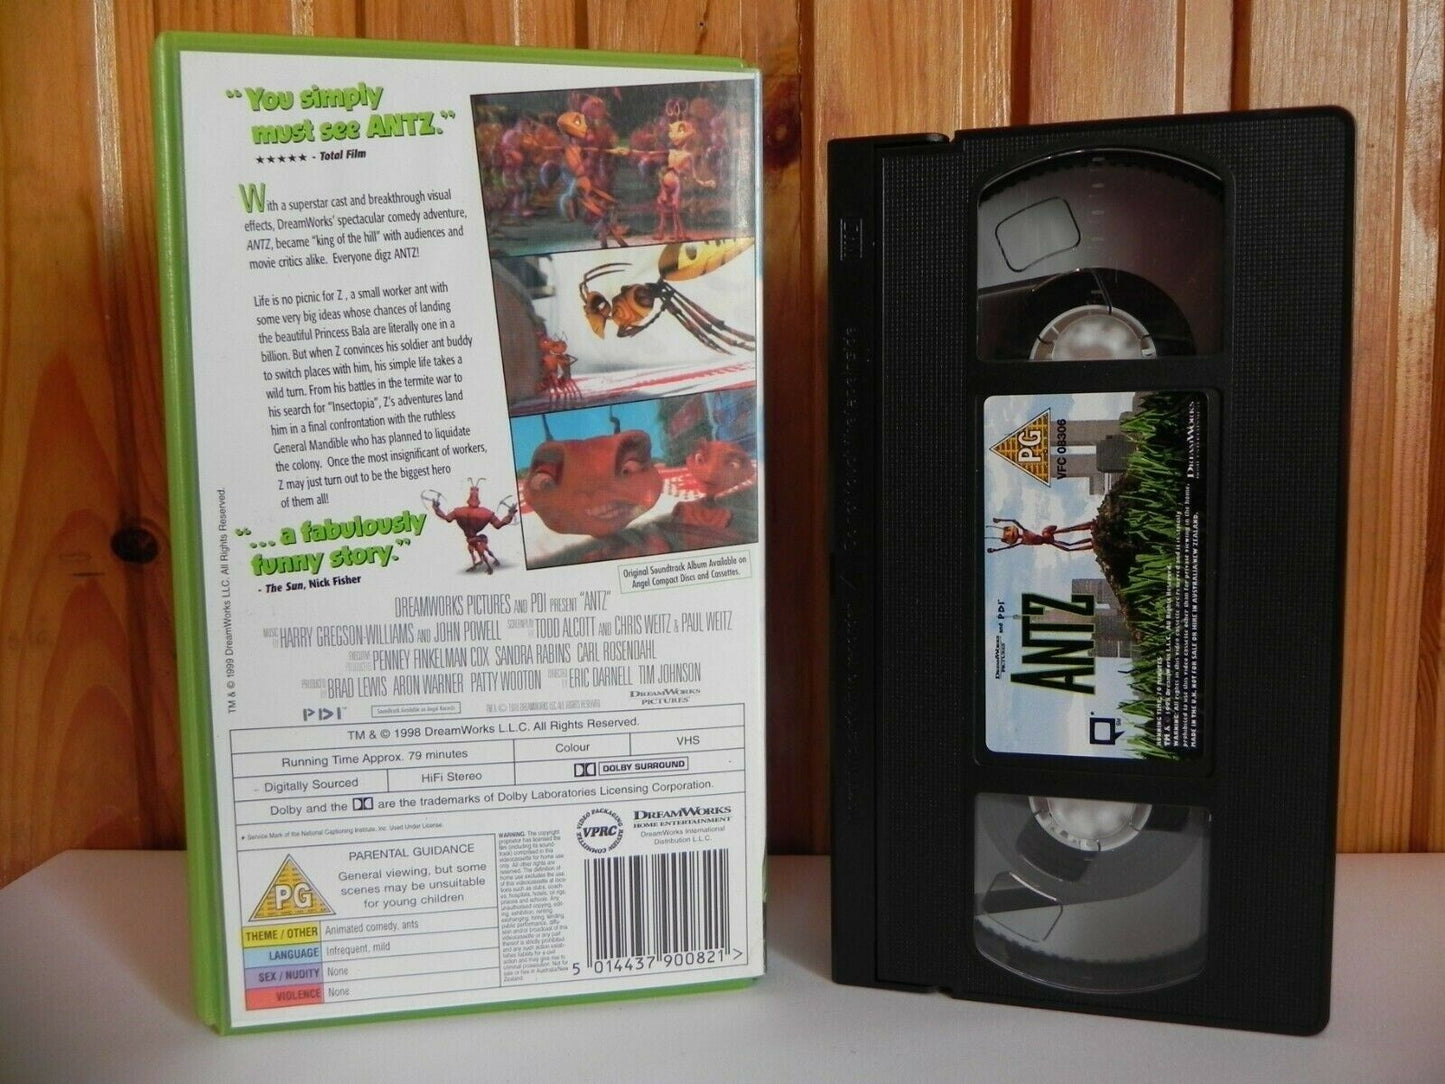 Antz - DreamWorks - Spectacular Comedy - Adventure - Family - Kids - Pal VHS-